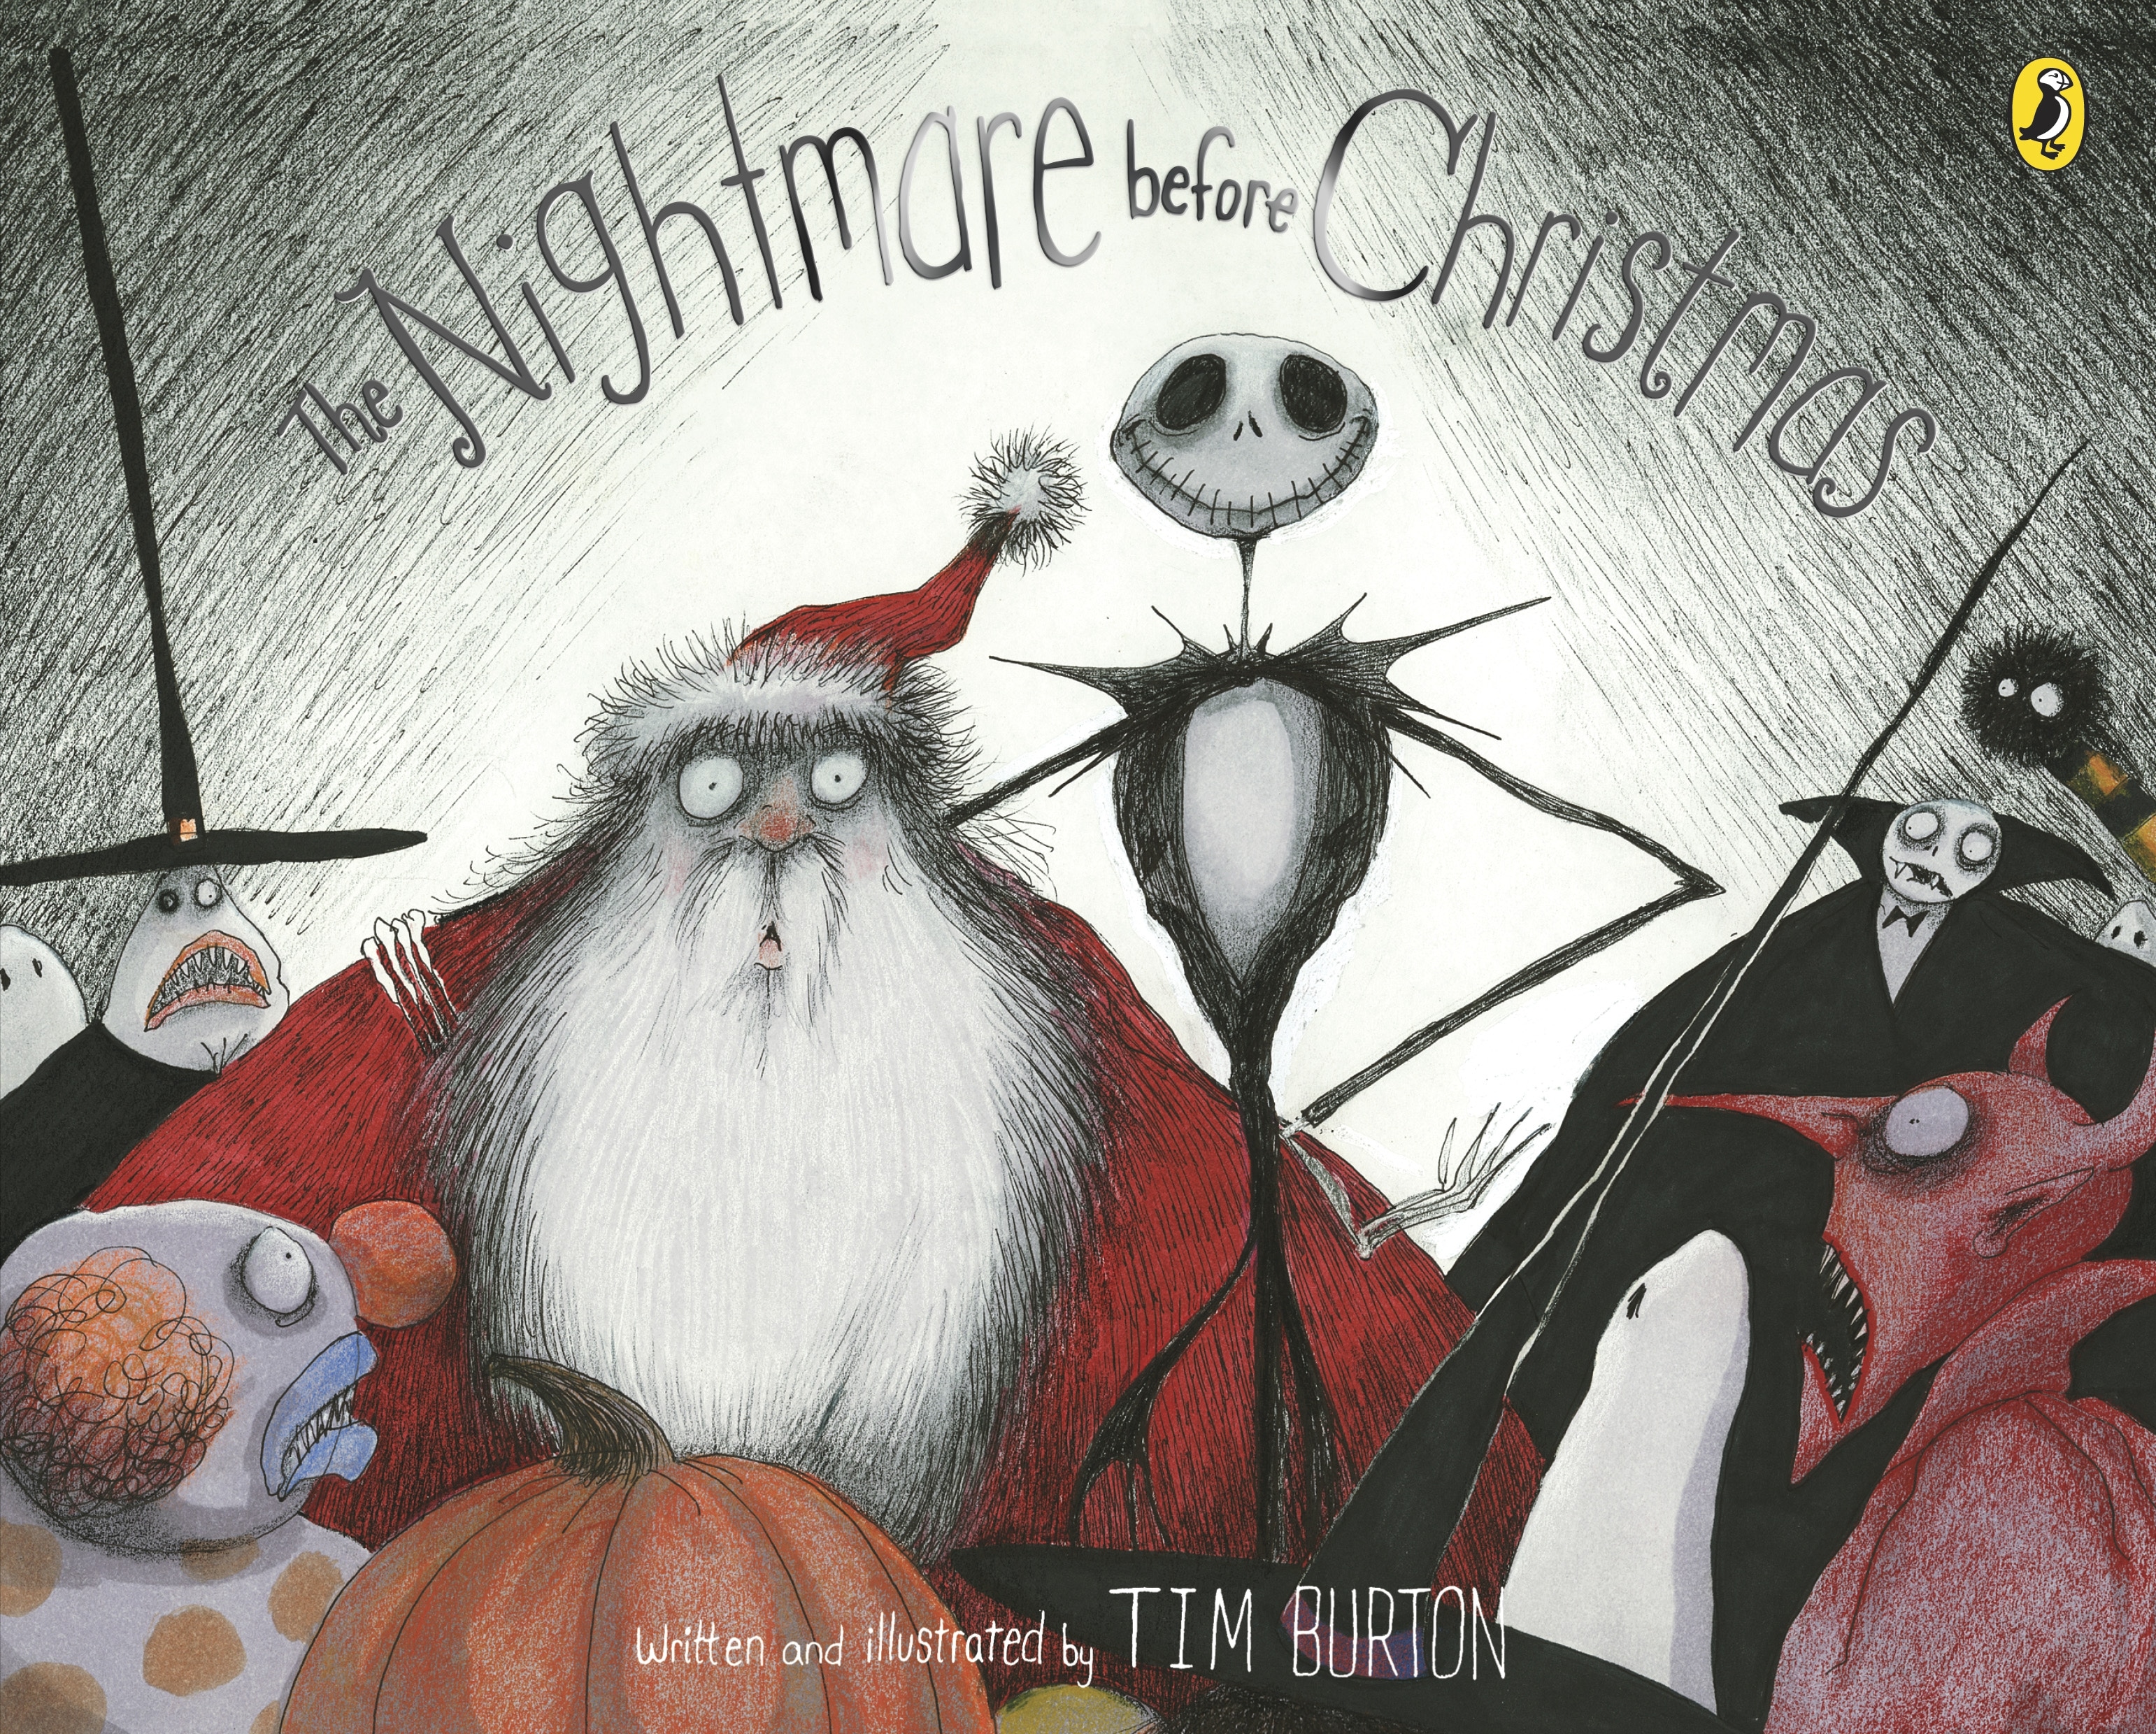 Book “The Nightmare Before Christmas” by Tim Burton — September 30, 2021